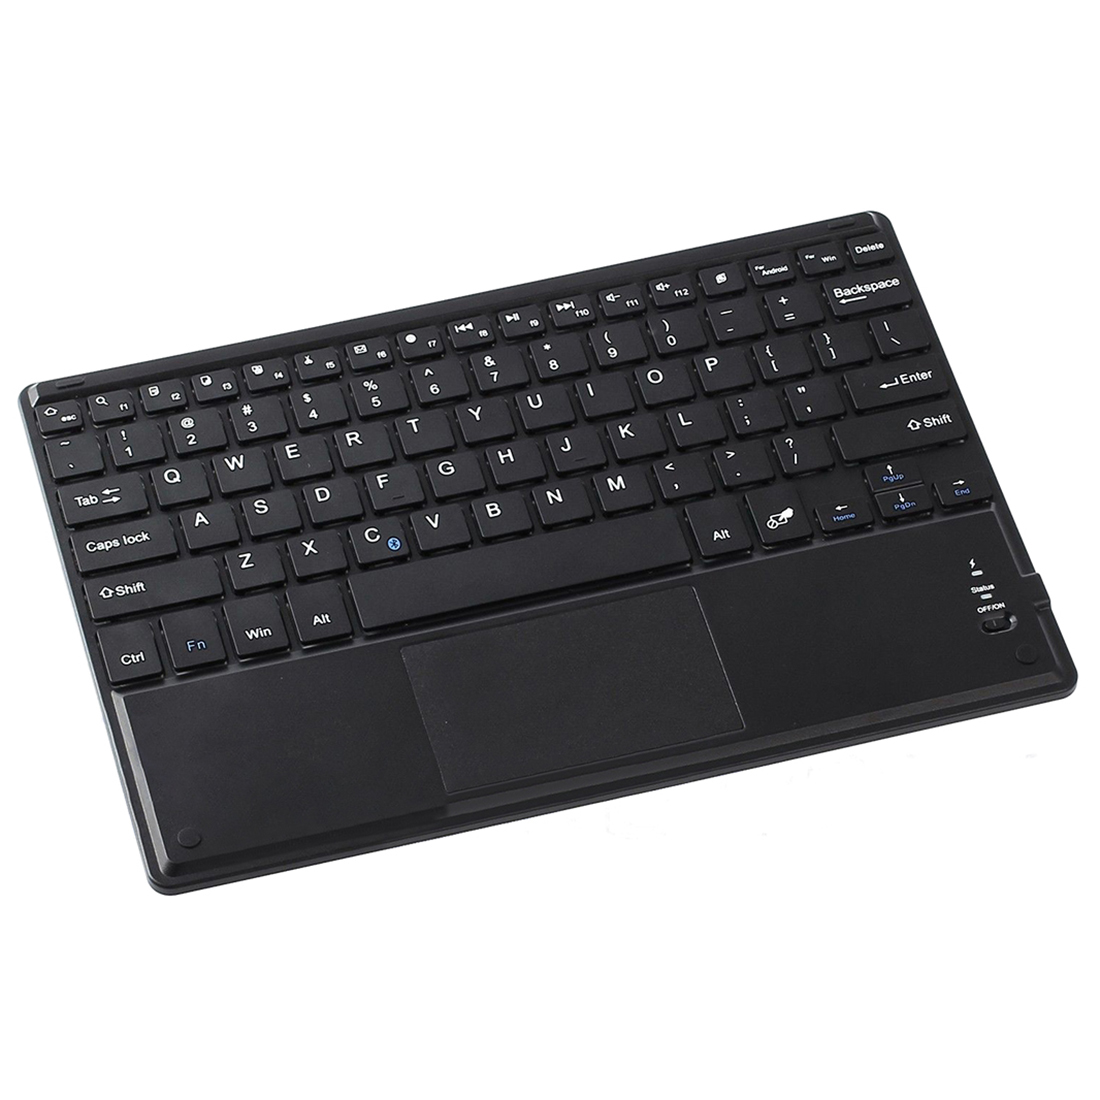 Bluetooth Keyboards For Mac